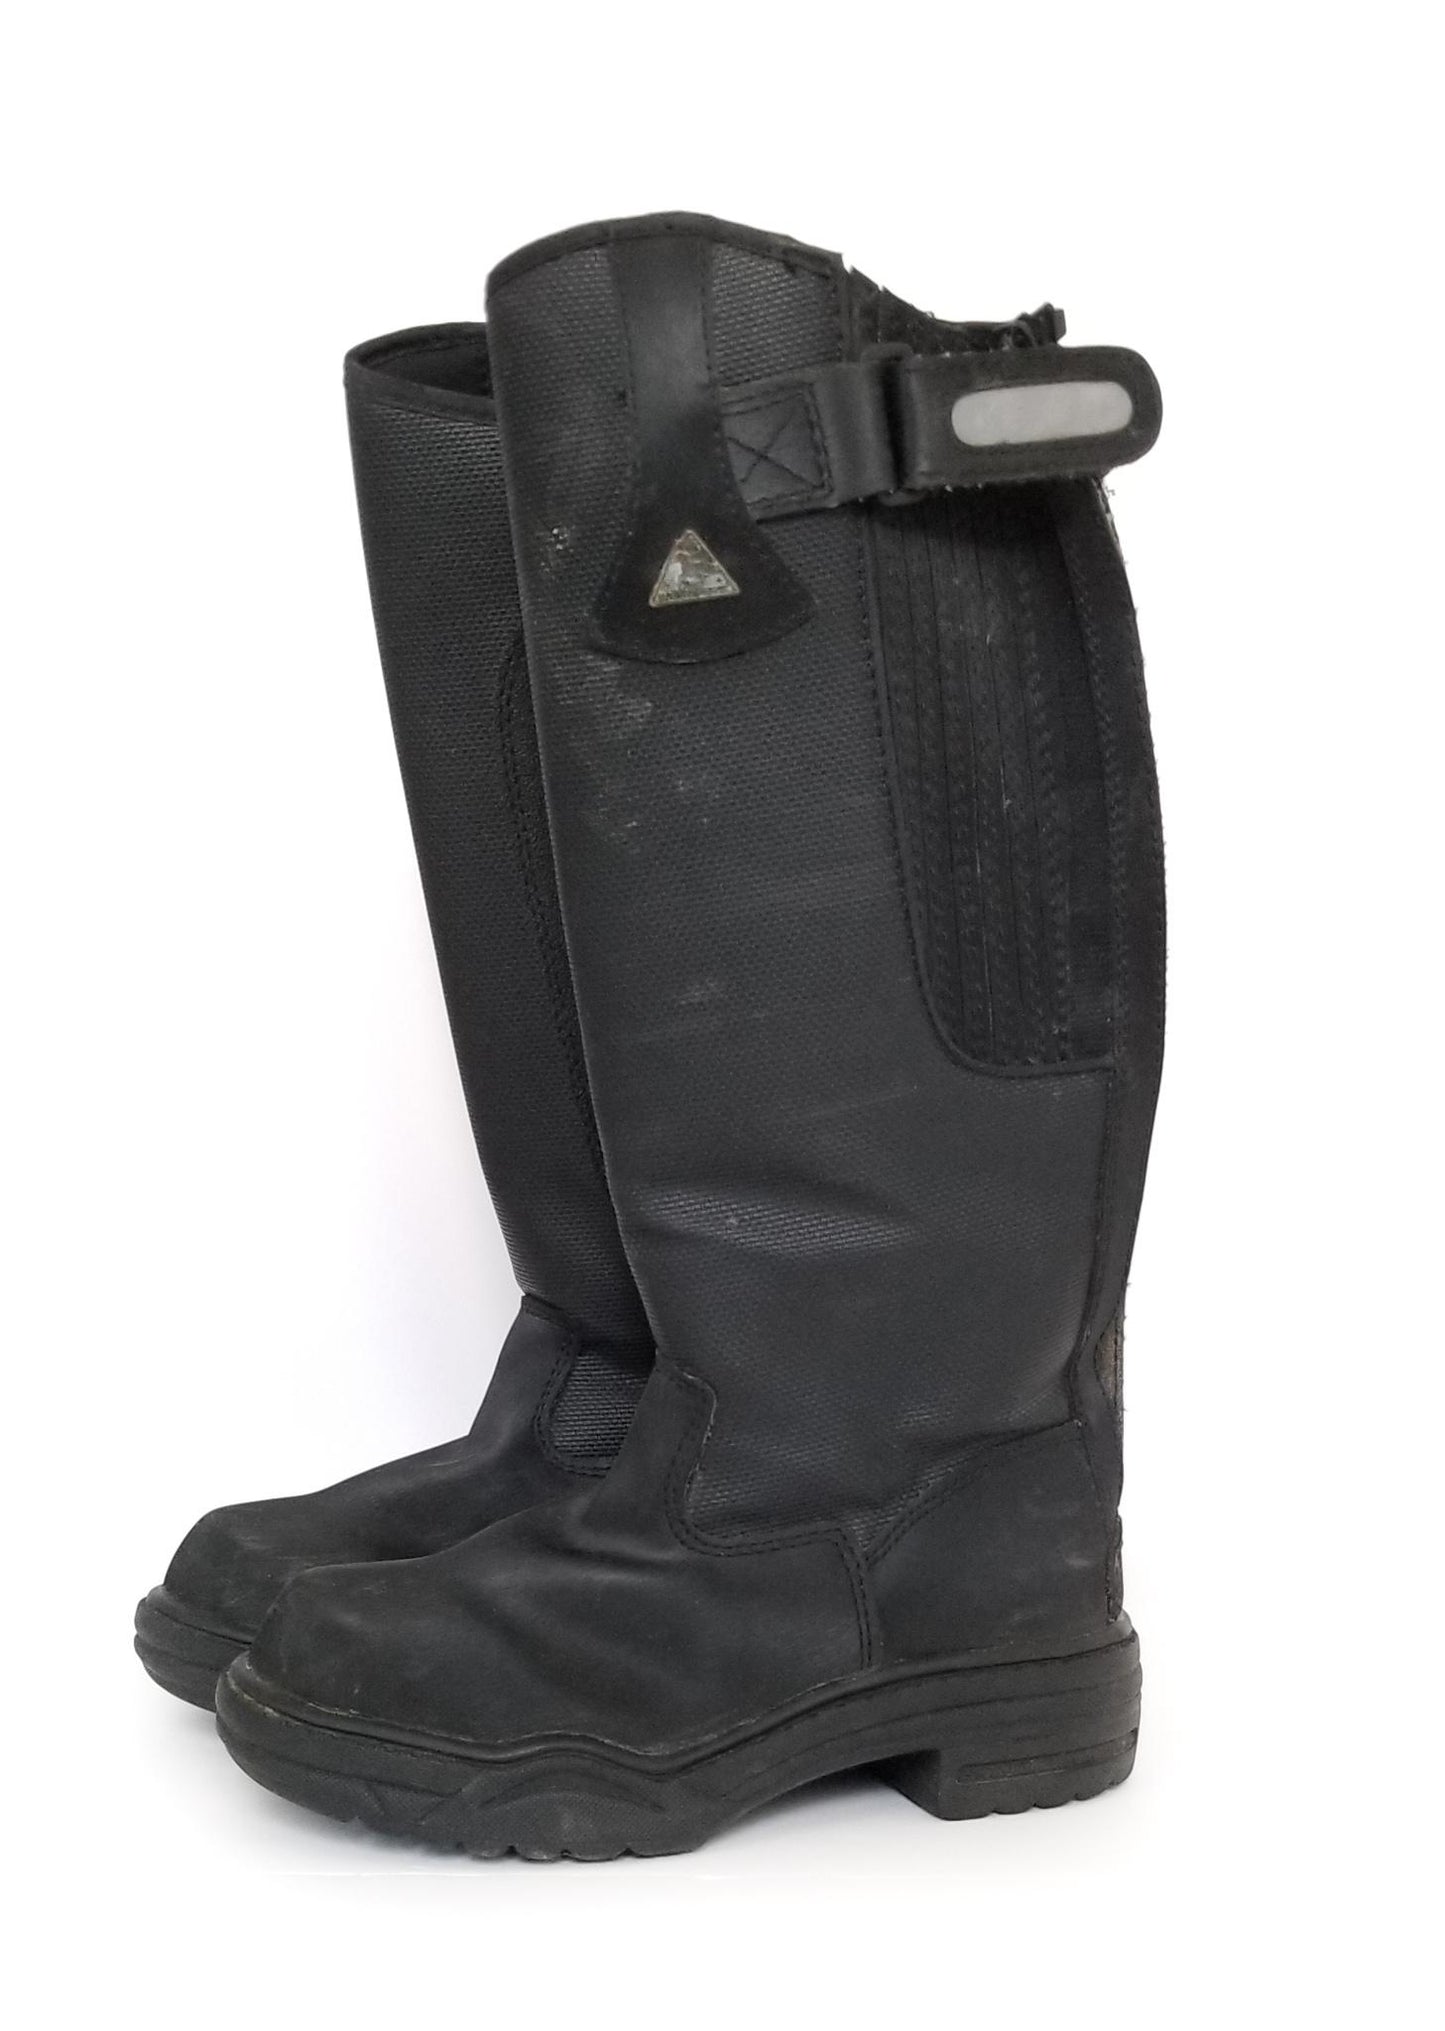 Mountain Horse Rimfrost Winter Tall Boot - Black - Junior Size 1